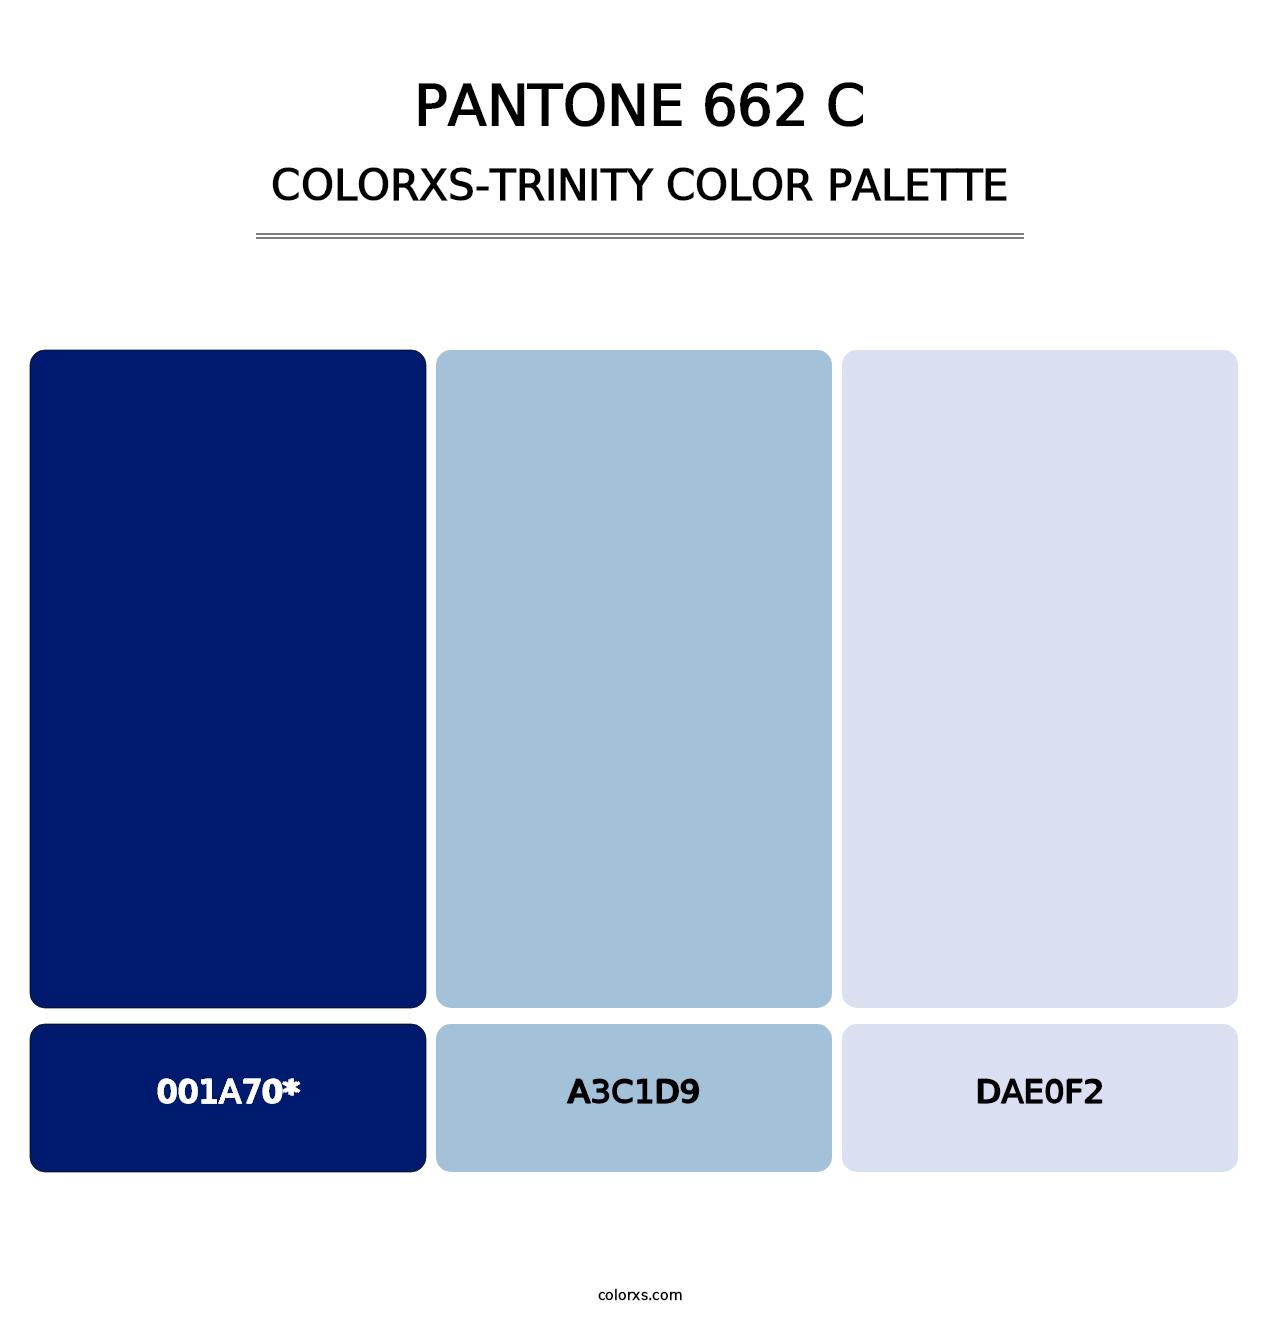 PANTONE 662 C - Colorxs Trinity Palette